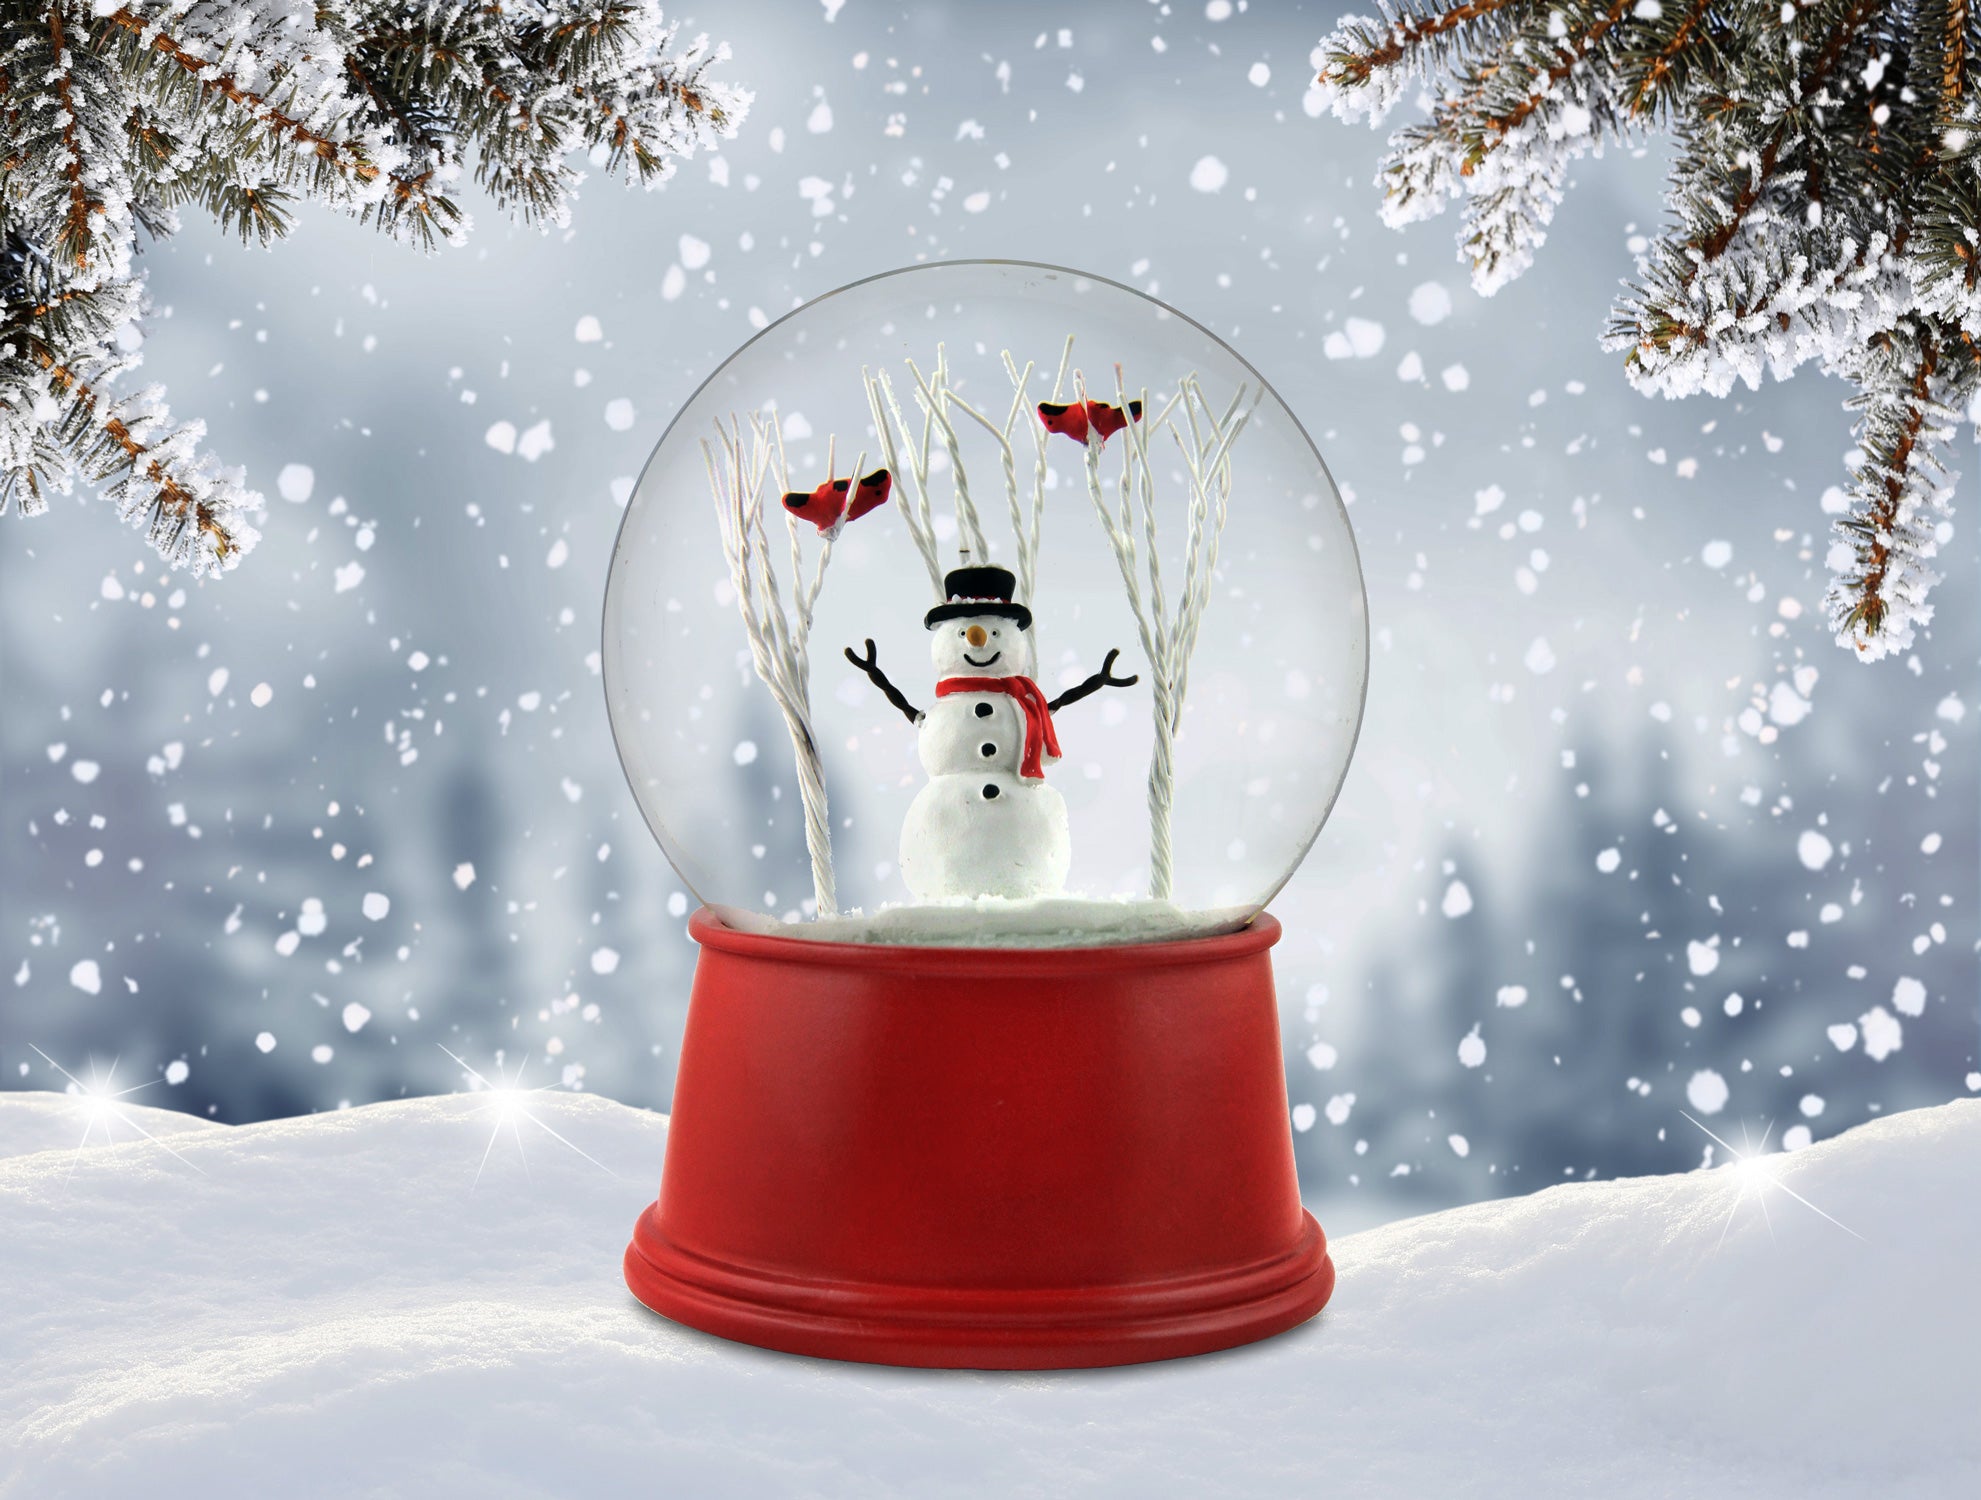 Snowman with Cardinals on a Tree Snow Globe - San Francisco Music